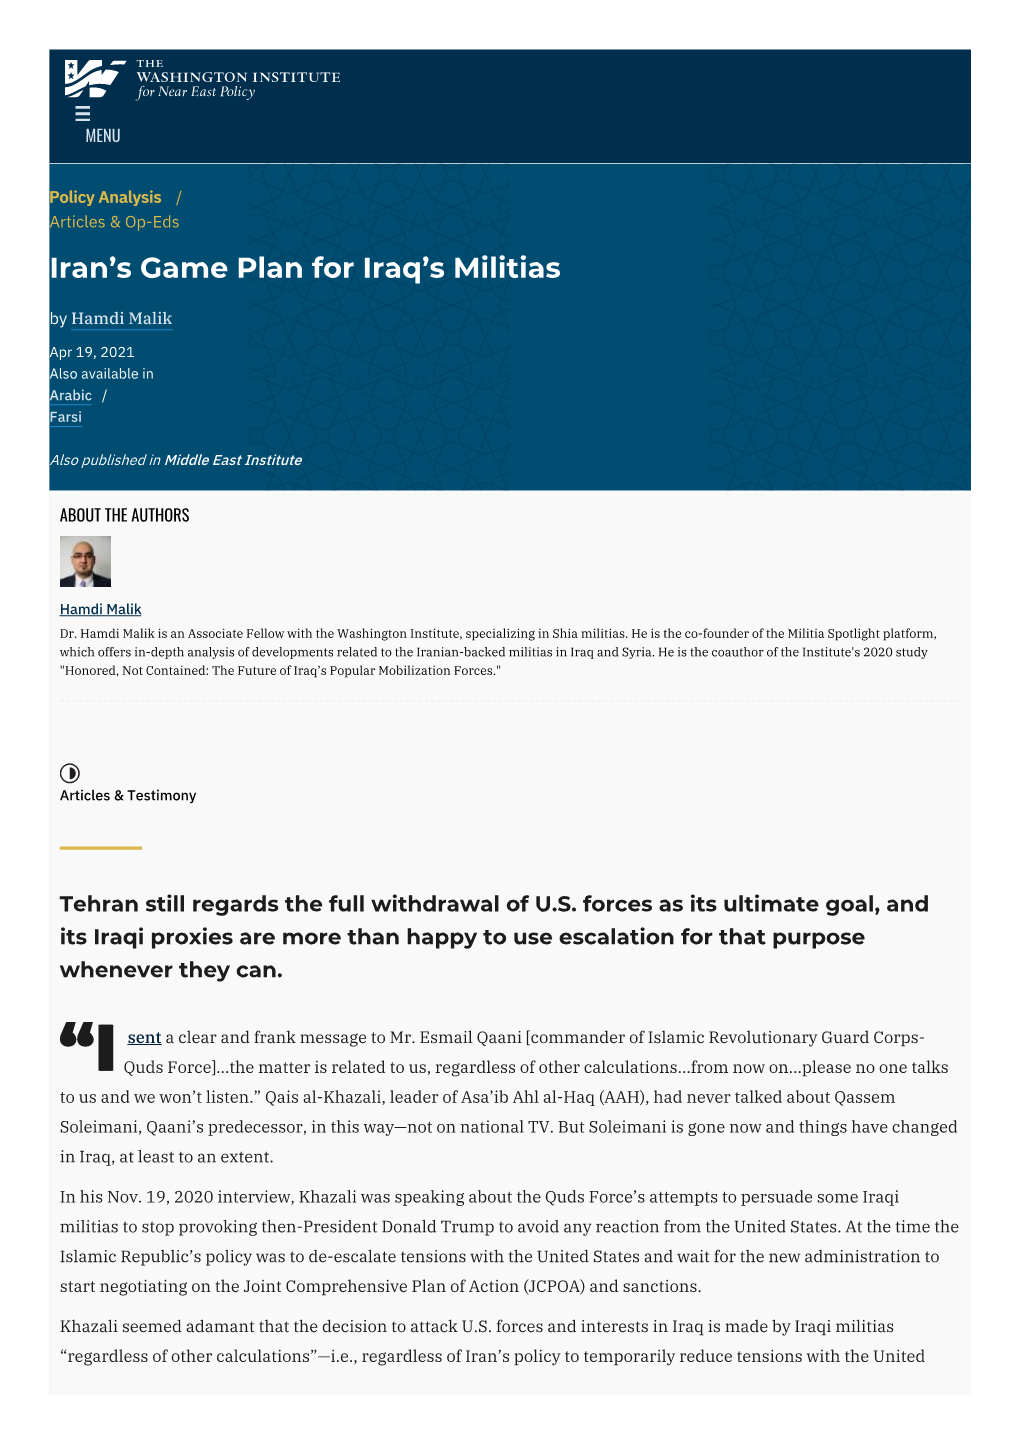 Iran's Game Plan for Iraq's Militias | the Washington Institute